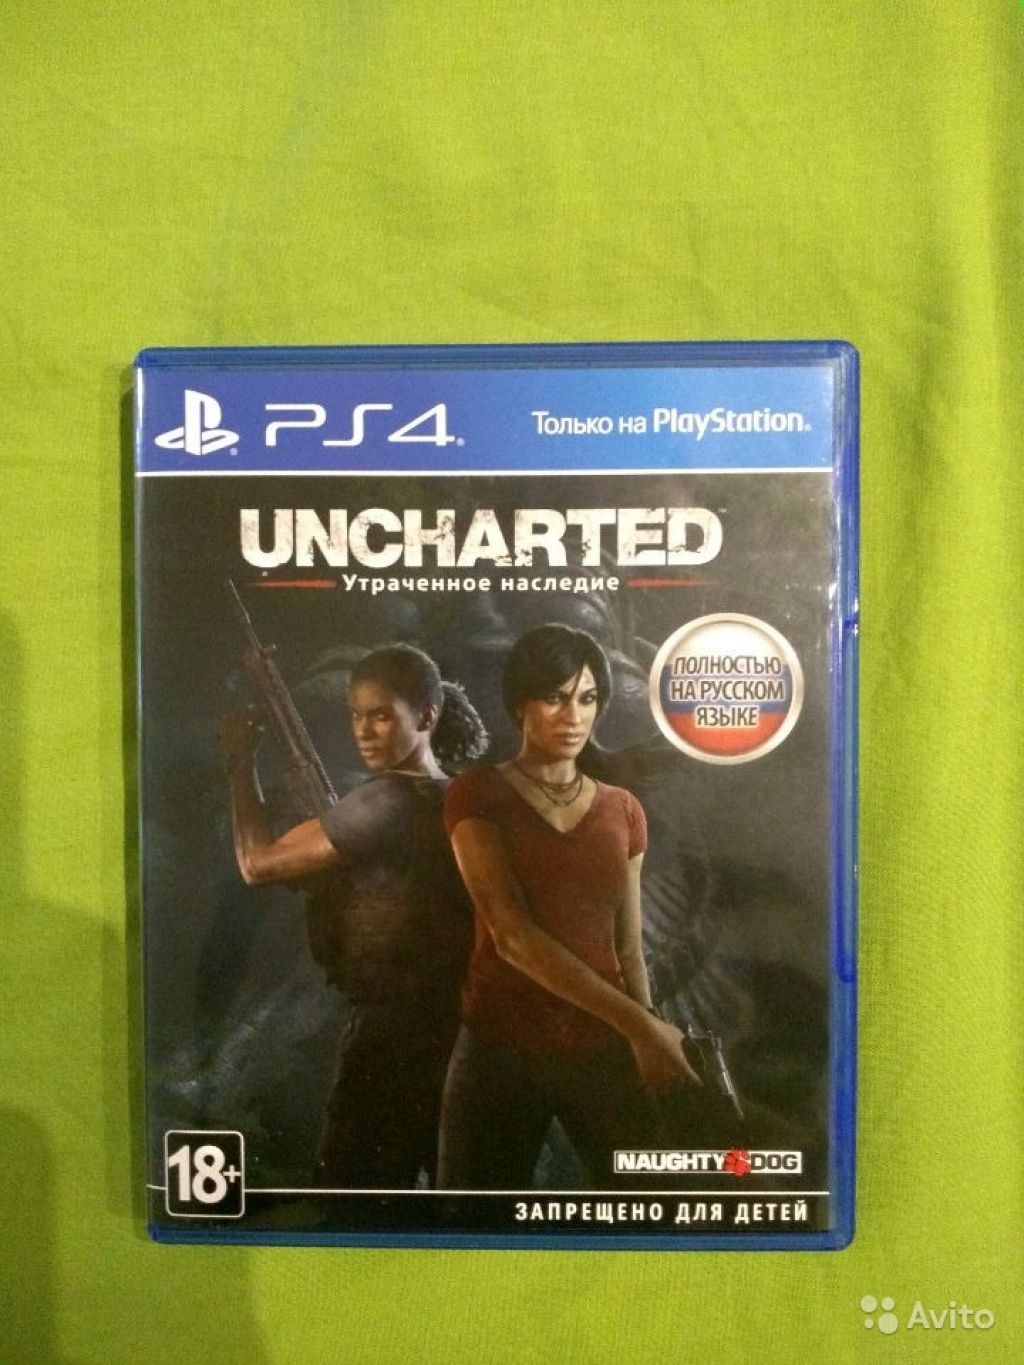 Uncharted: Утерянное наследие - Playstation 4 PS4 в Москве. Фото 1